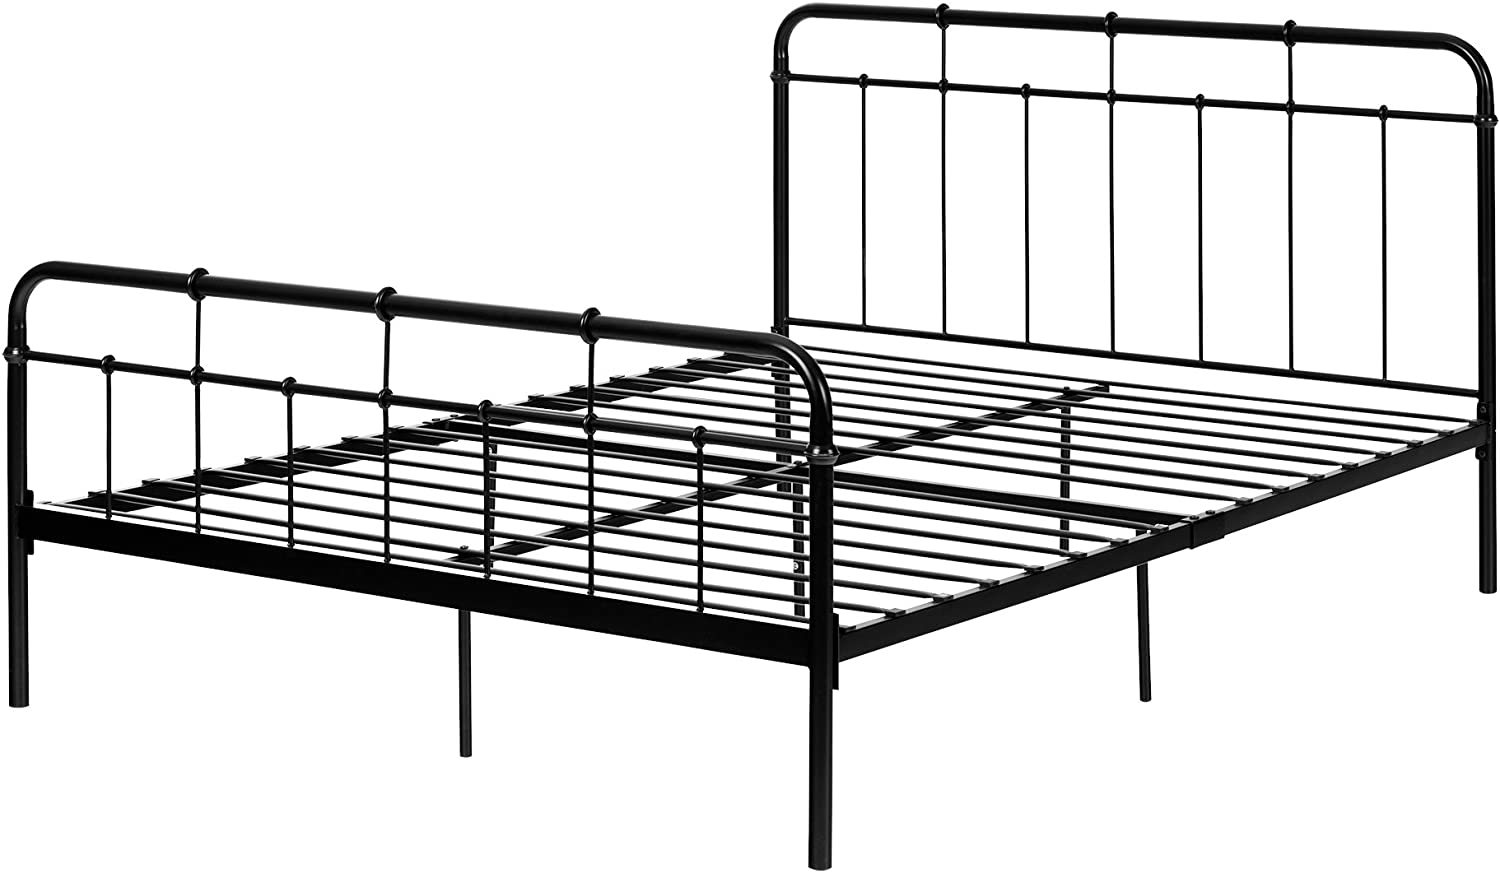 South Shore Gravity Metal Platform Bed, Queen, Black - $320.99